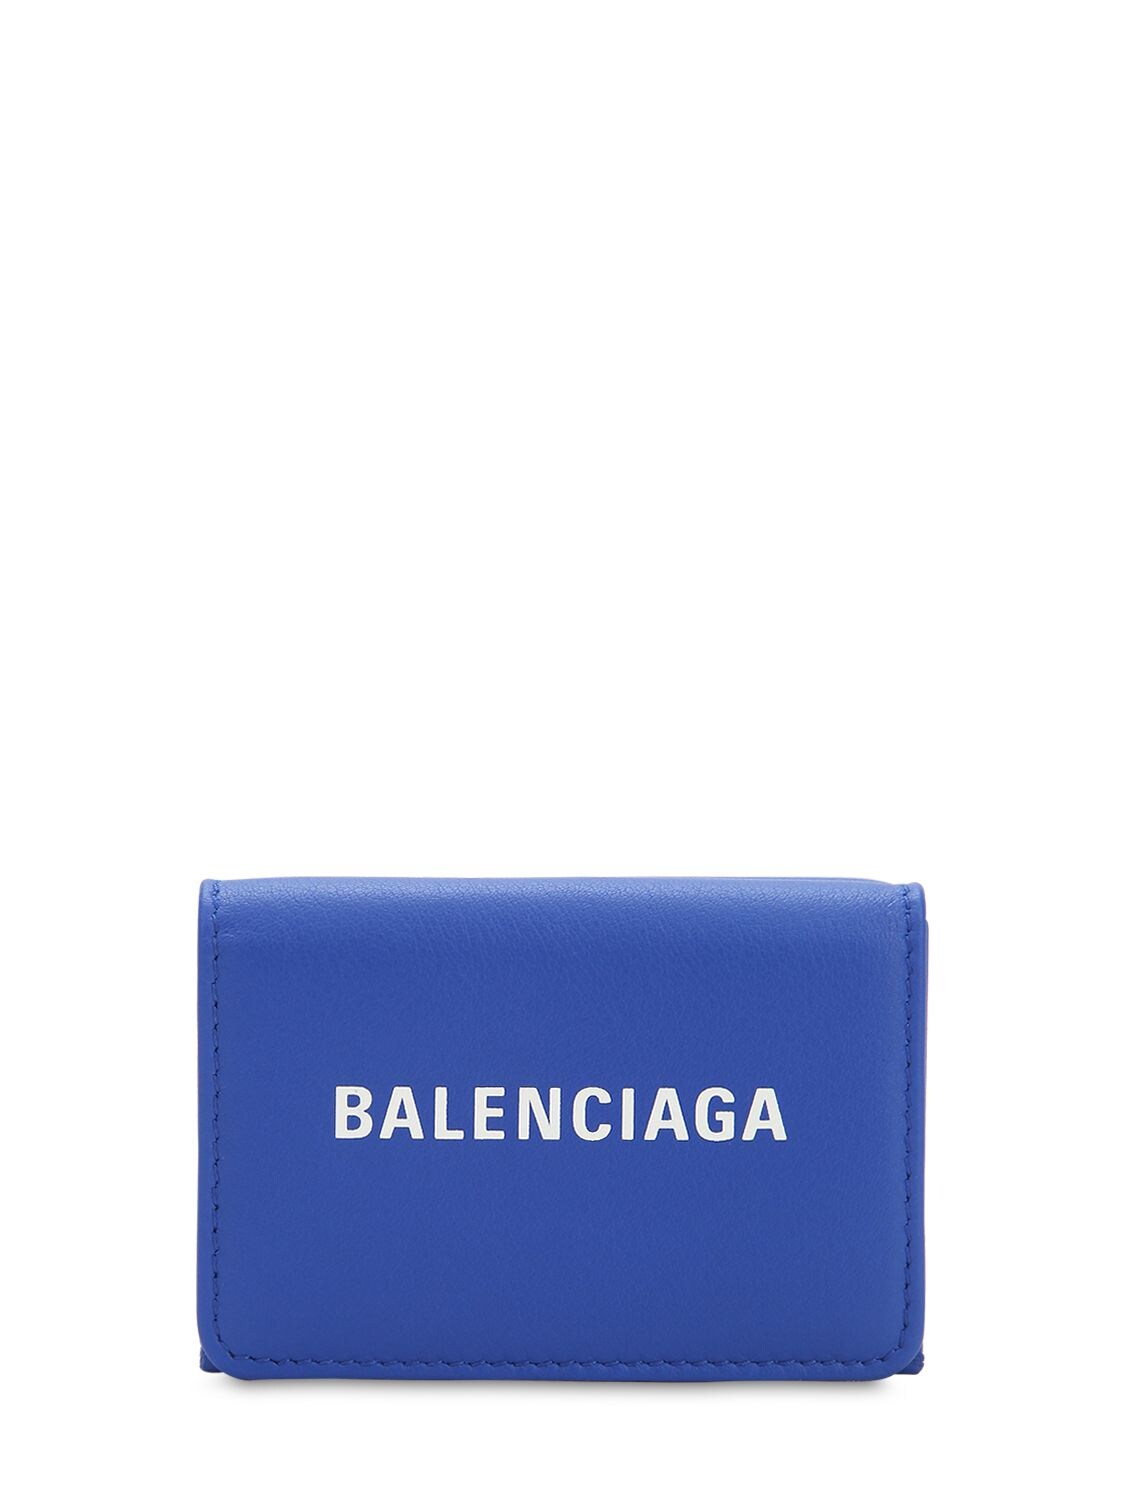 Balenciaga Leather Mini Wallet In Royal Blue